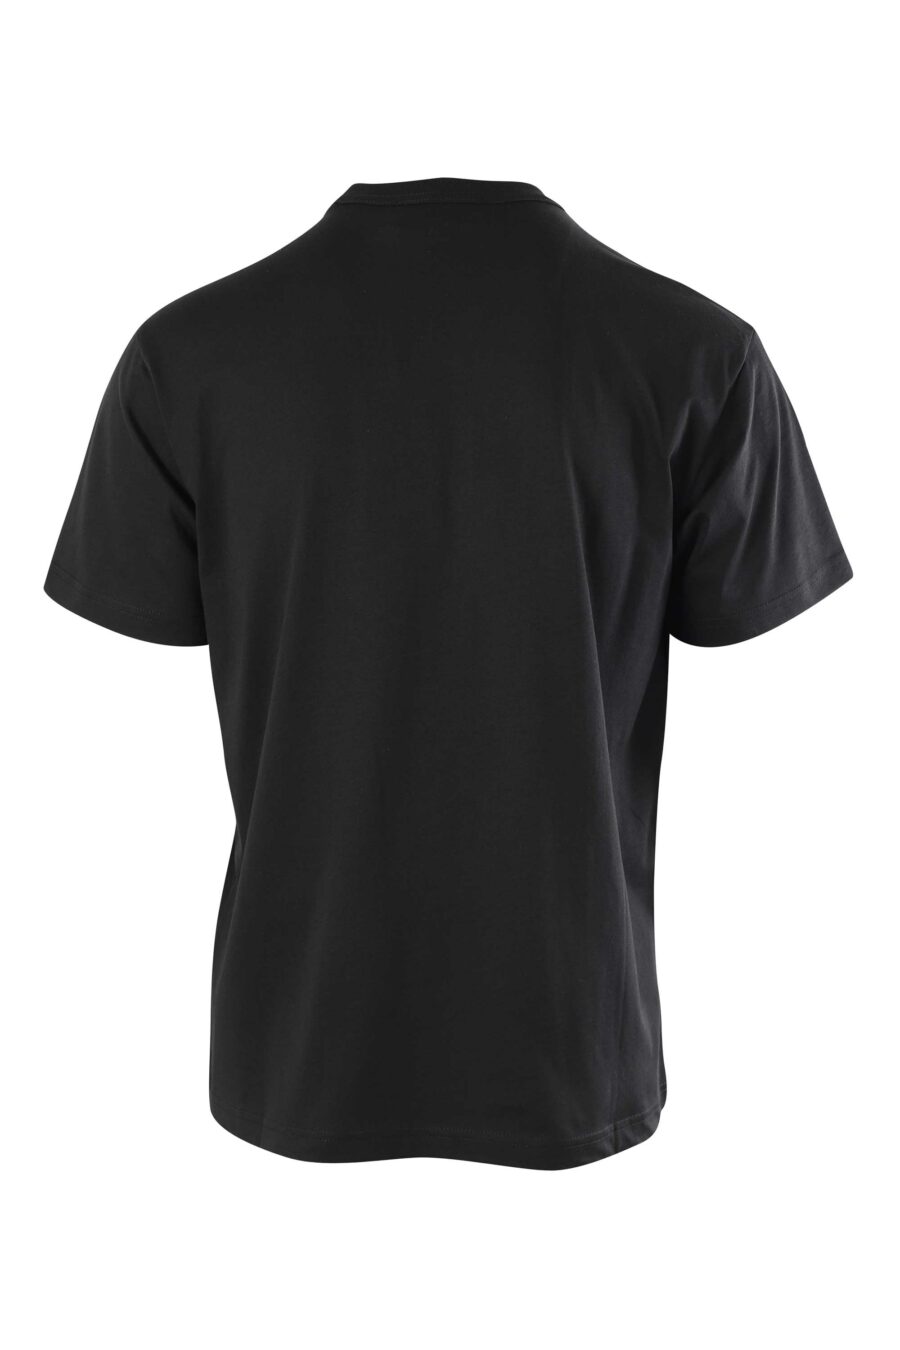 Black T-shirt with centred maxilogo - 8052019318753 2